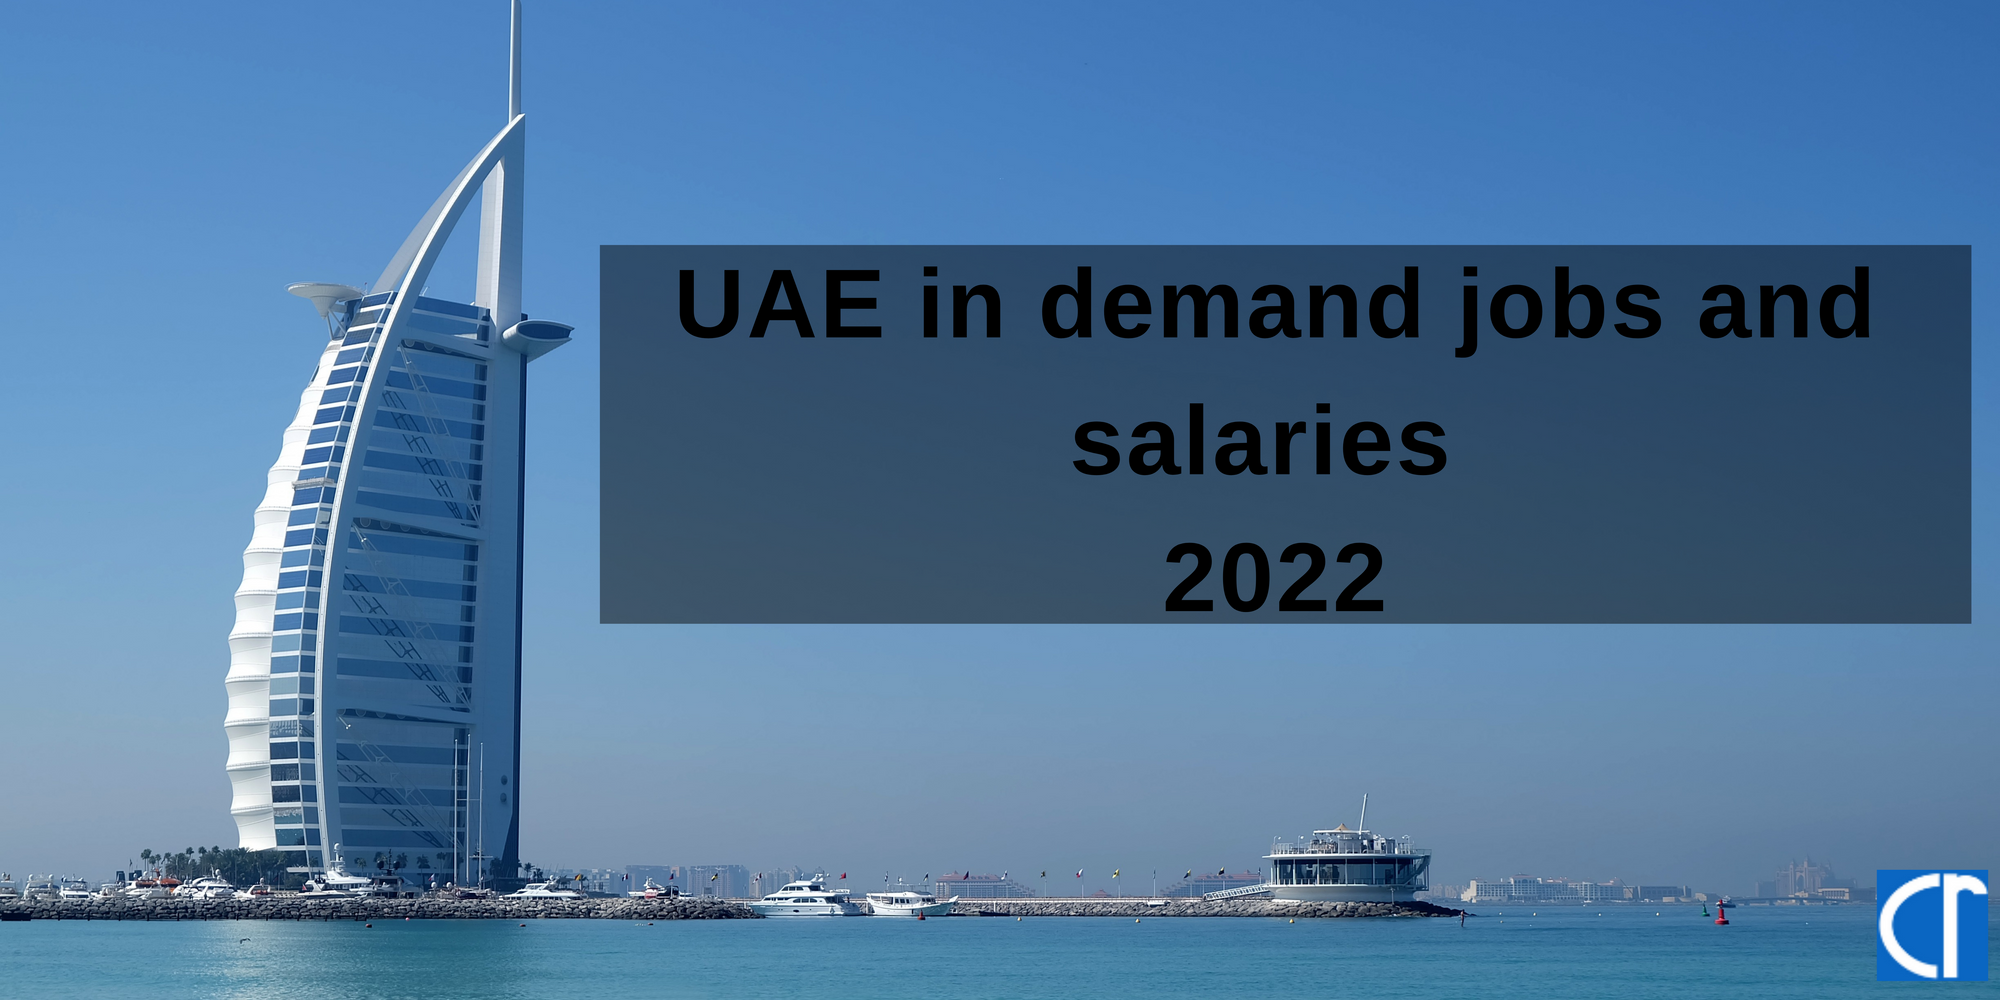 UAE in demand jobs and salaries 2022